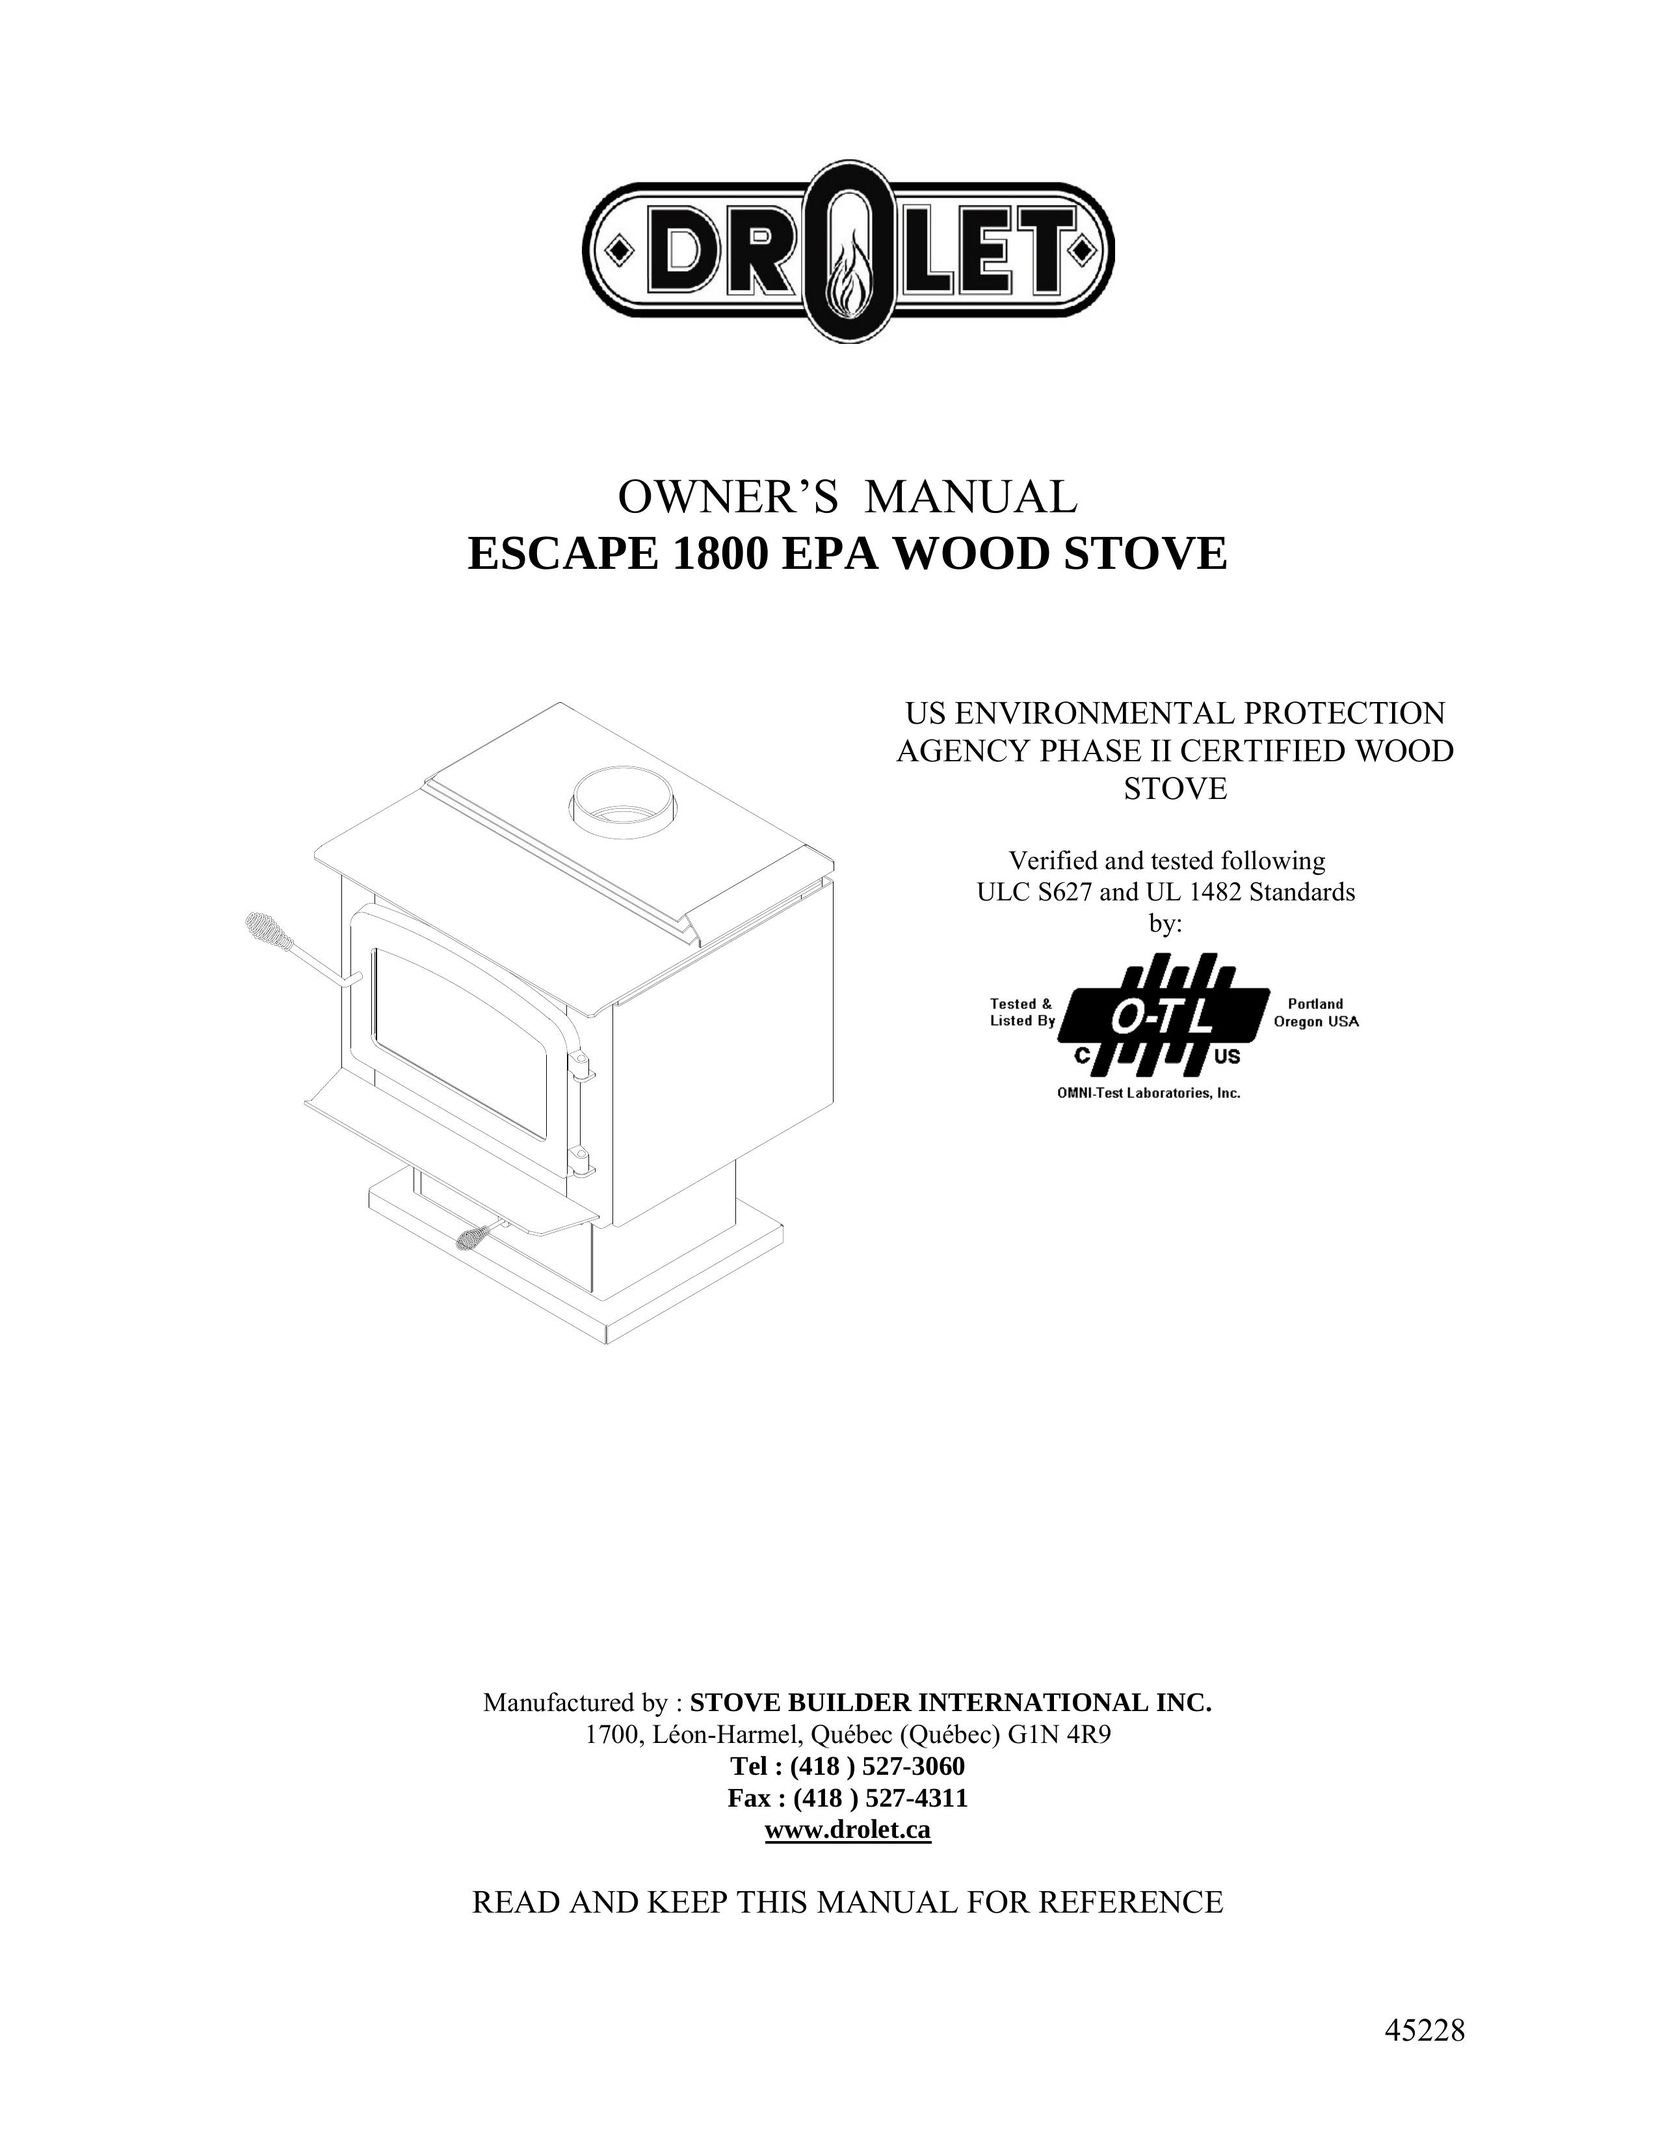 Drolet ESCAPE 1800 Stove User Manual